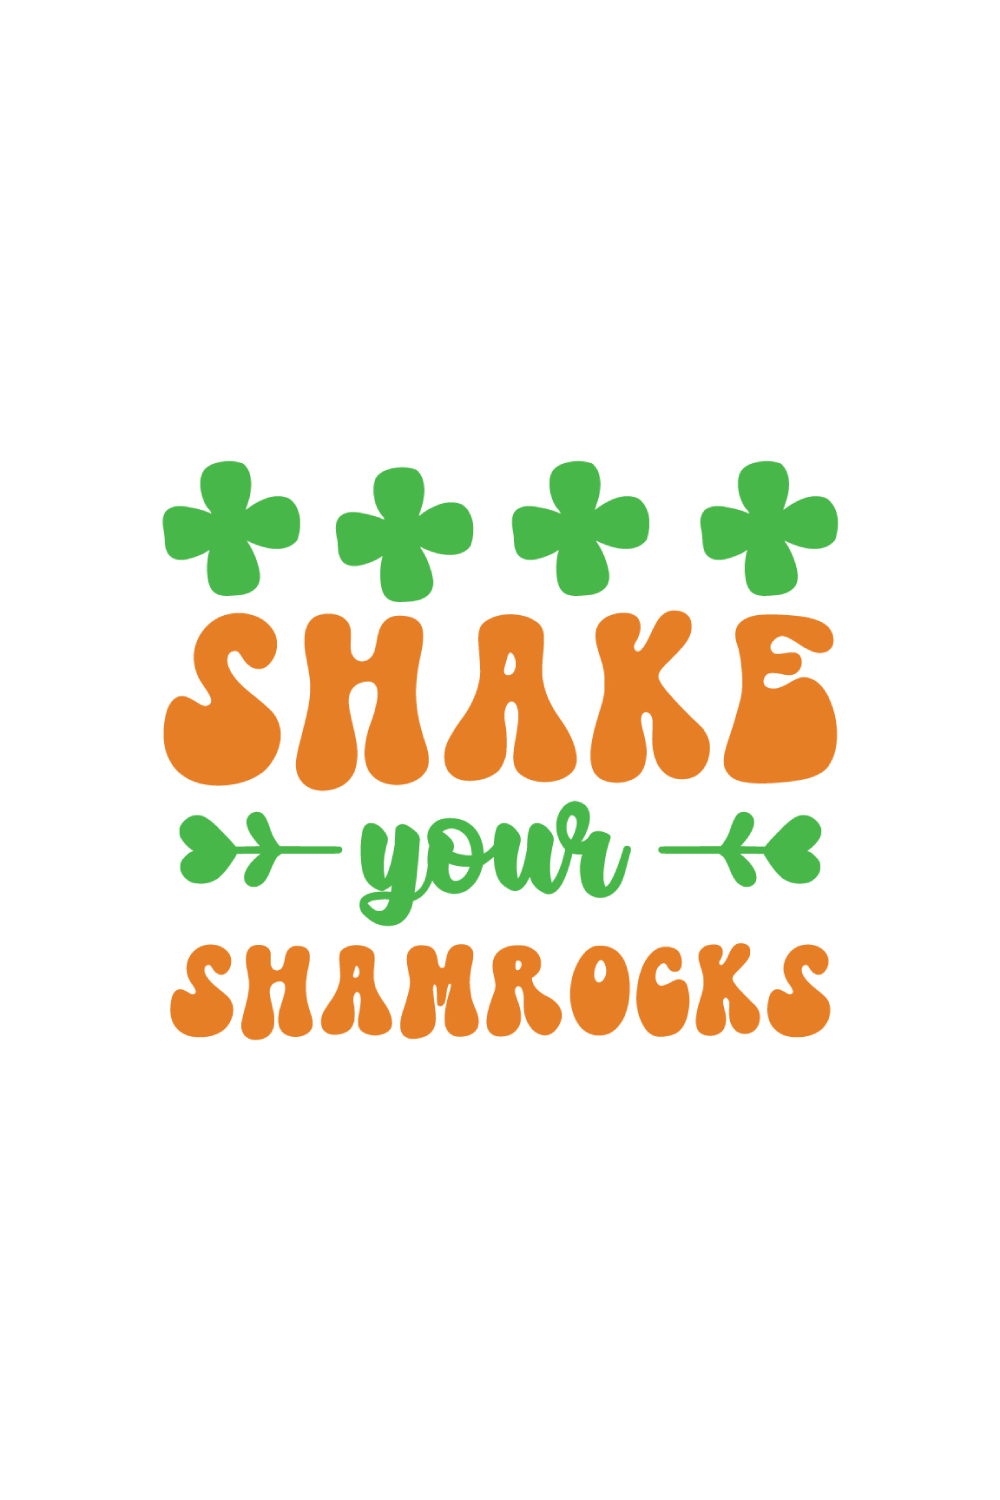 Shake your shamrocks pinterest preview image.